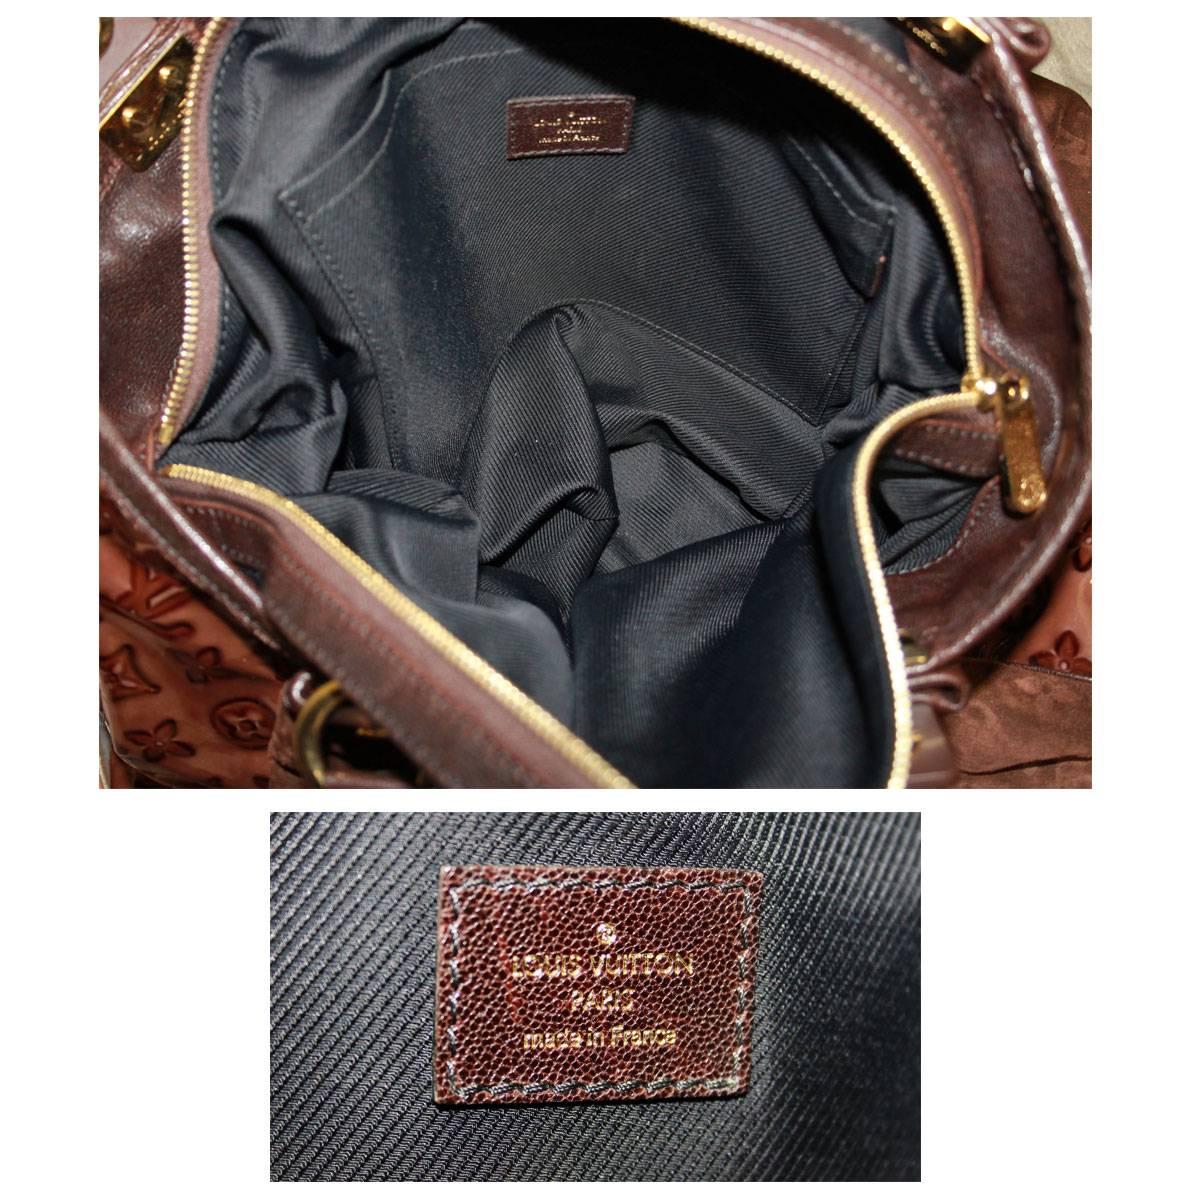 Louis Vuitton Irene Espresso Suede Patent Leather Limited Edition Large Handbag 1